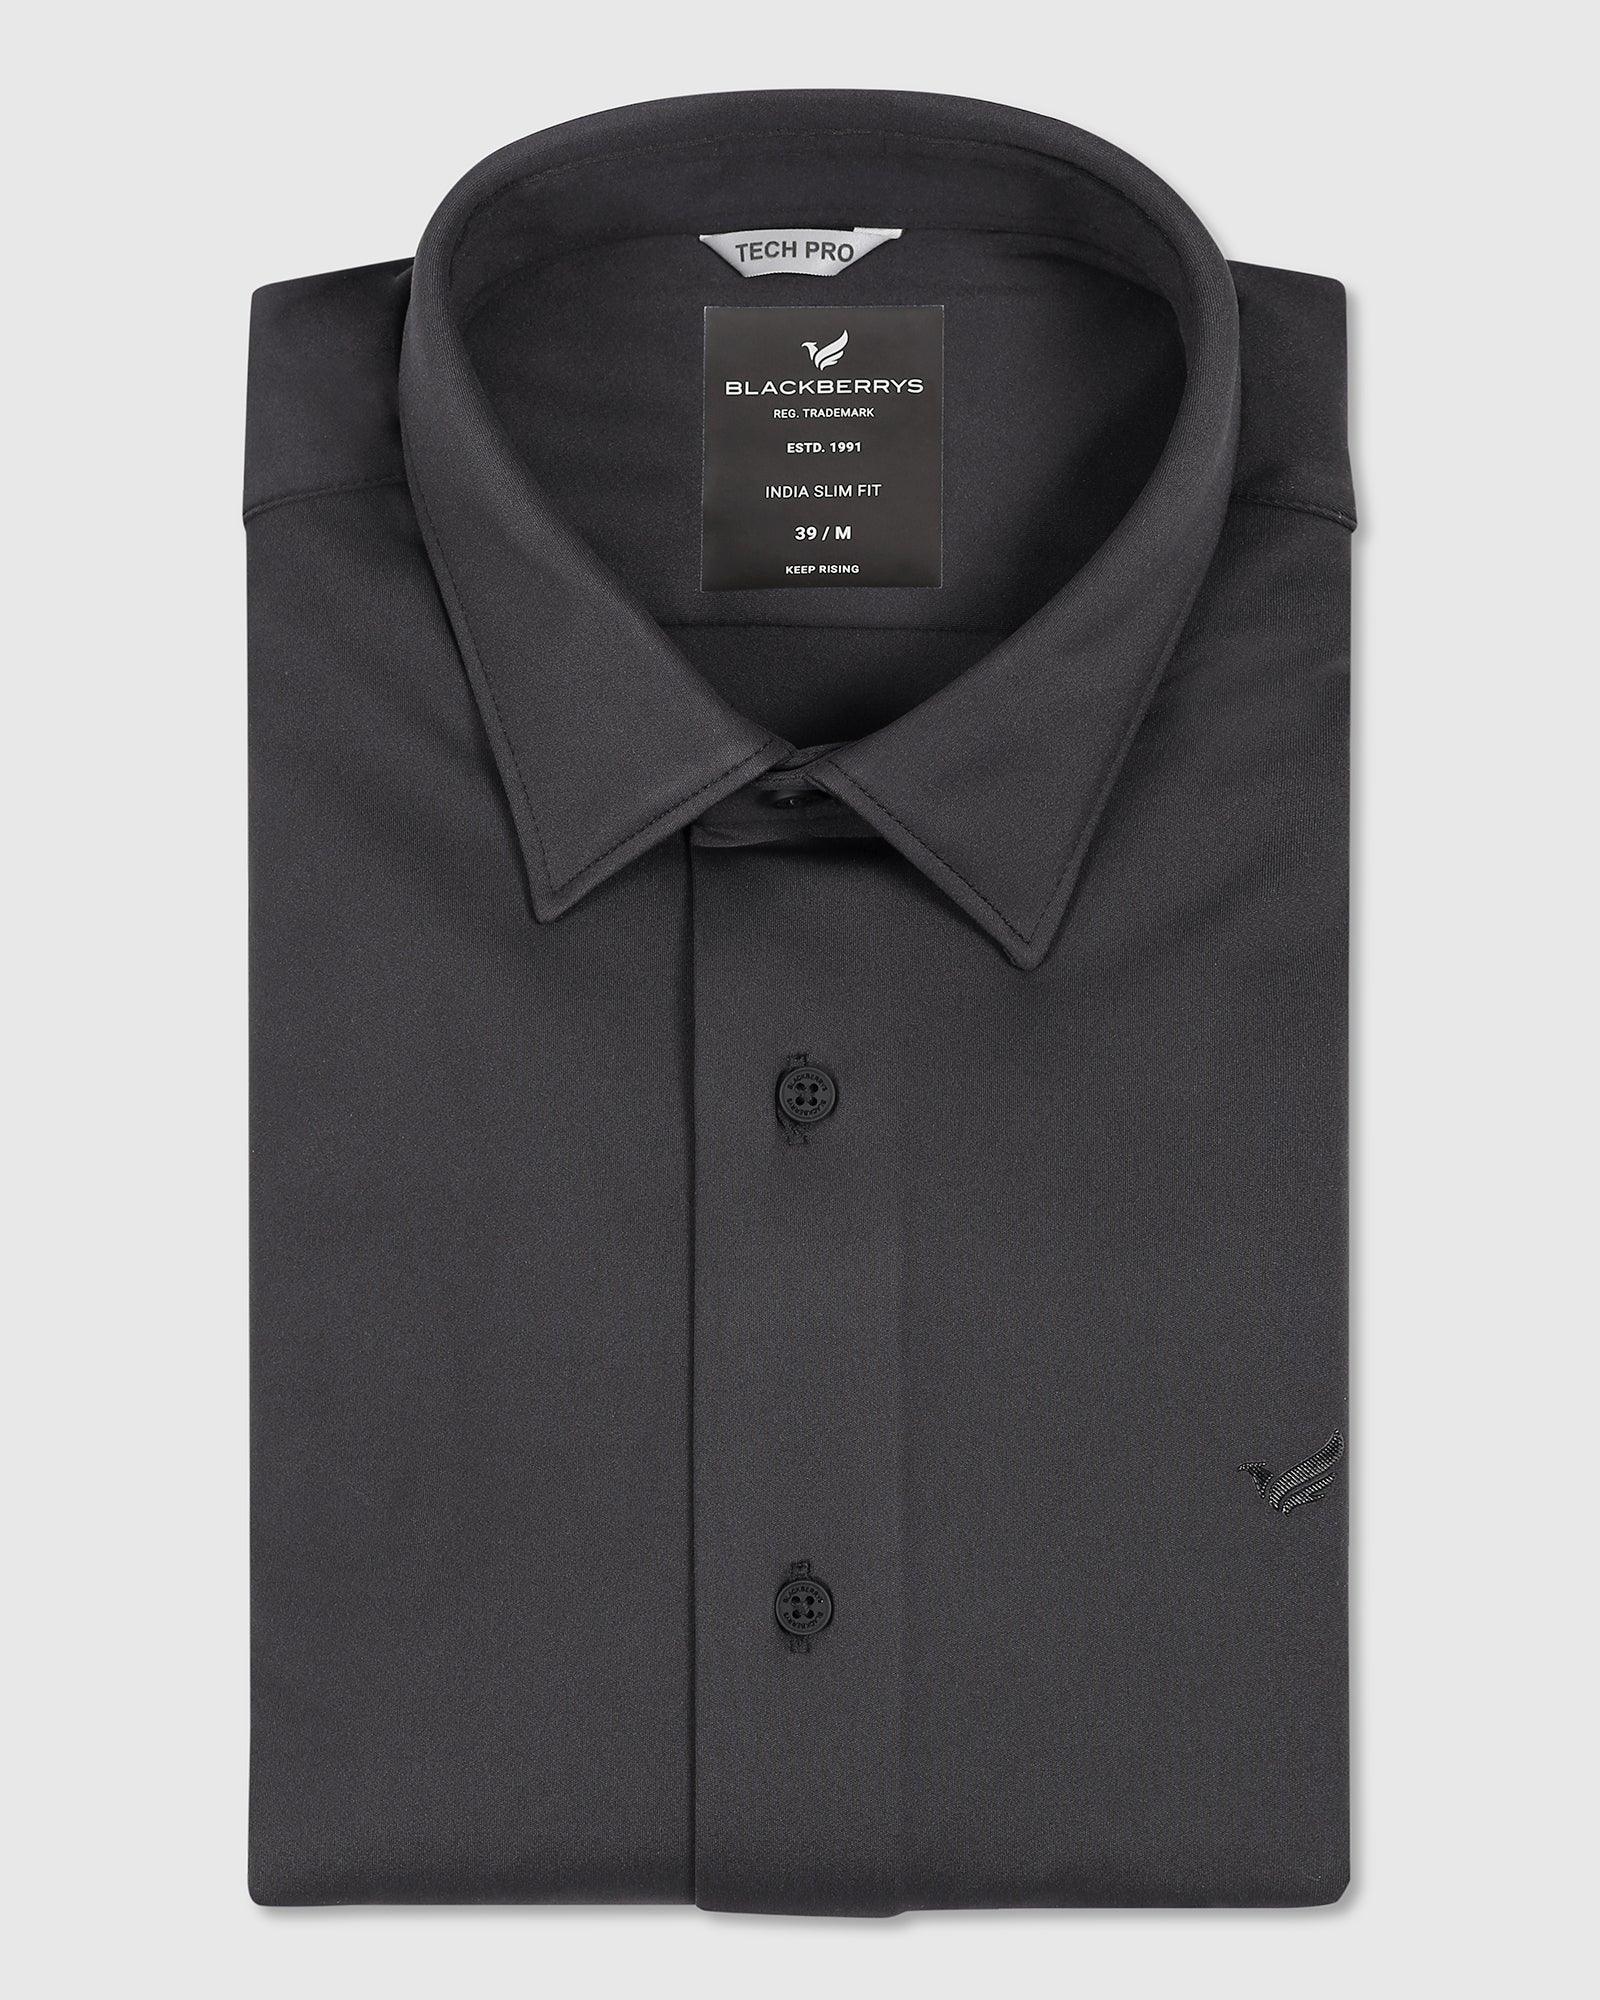 TechPro Formal Black Solid Shirt - Admin